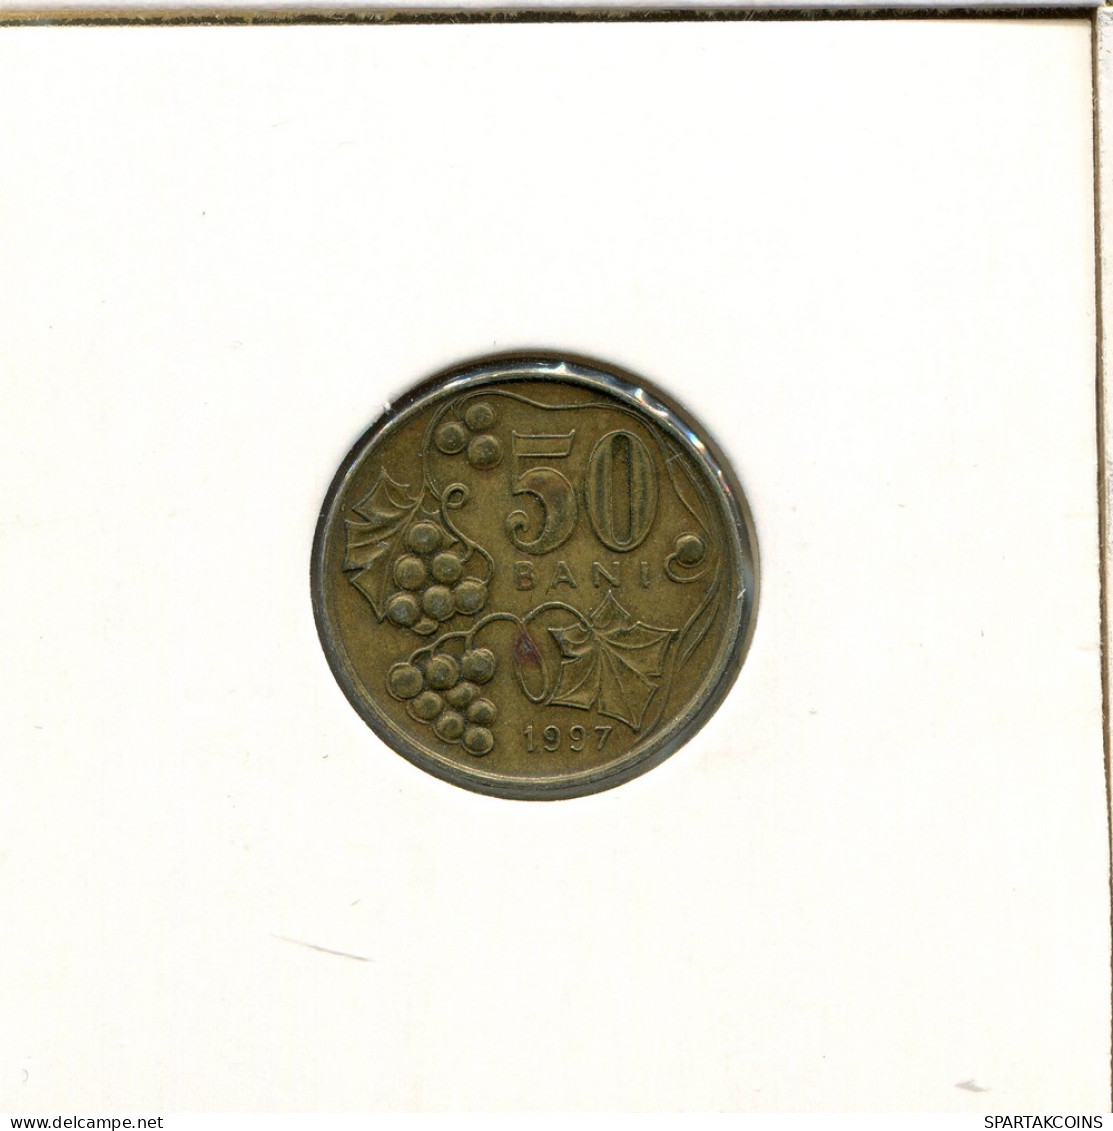 5 BANI 1997 MOLDOVA Coin #AR707.U - Moldavie